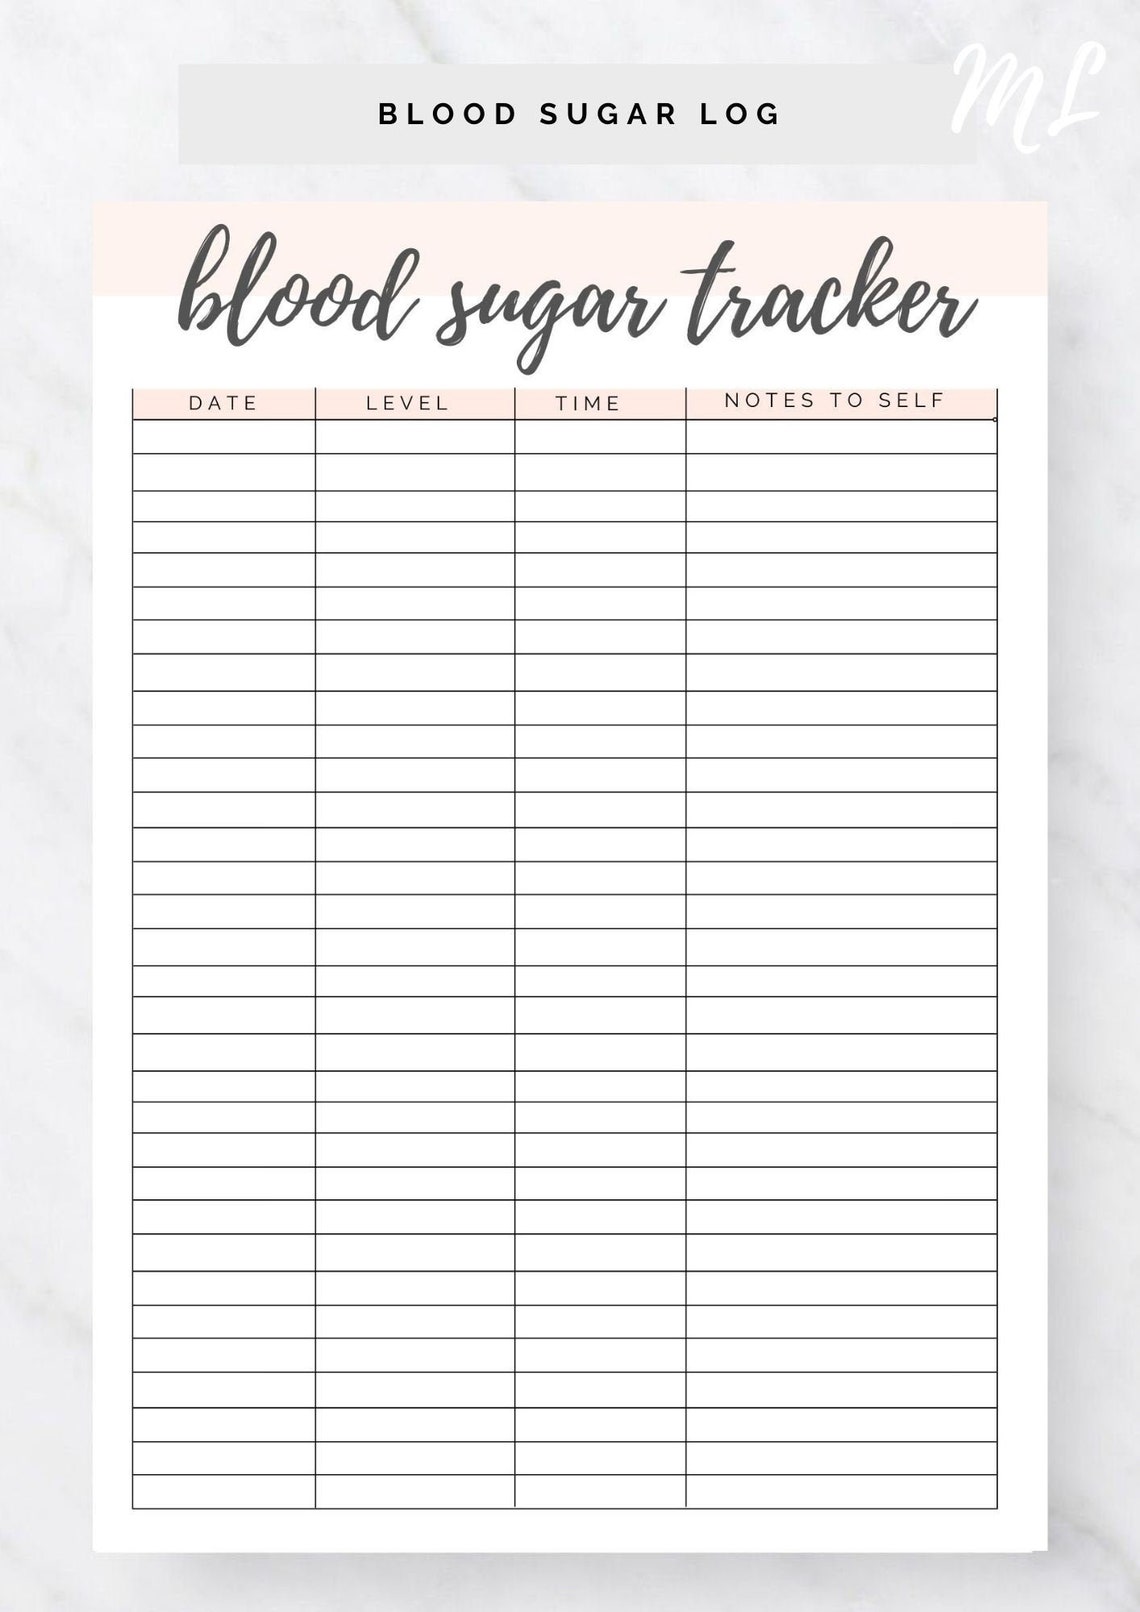 blood-sugar-log-printable-blood-sugar-reading-tracker-blood-glucose